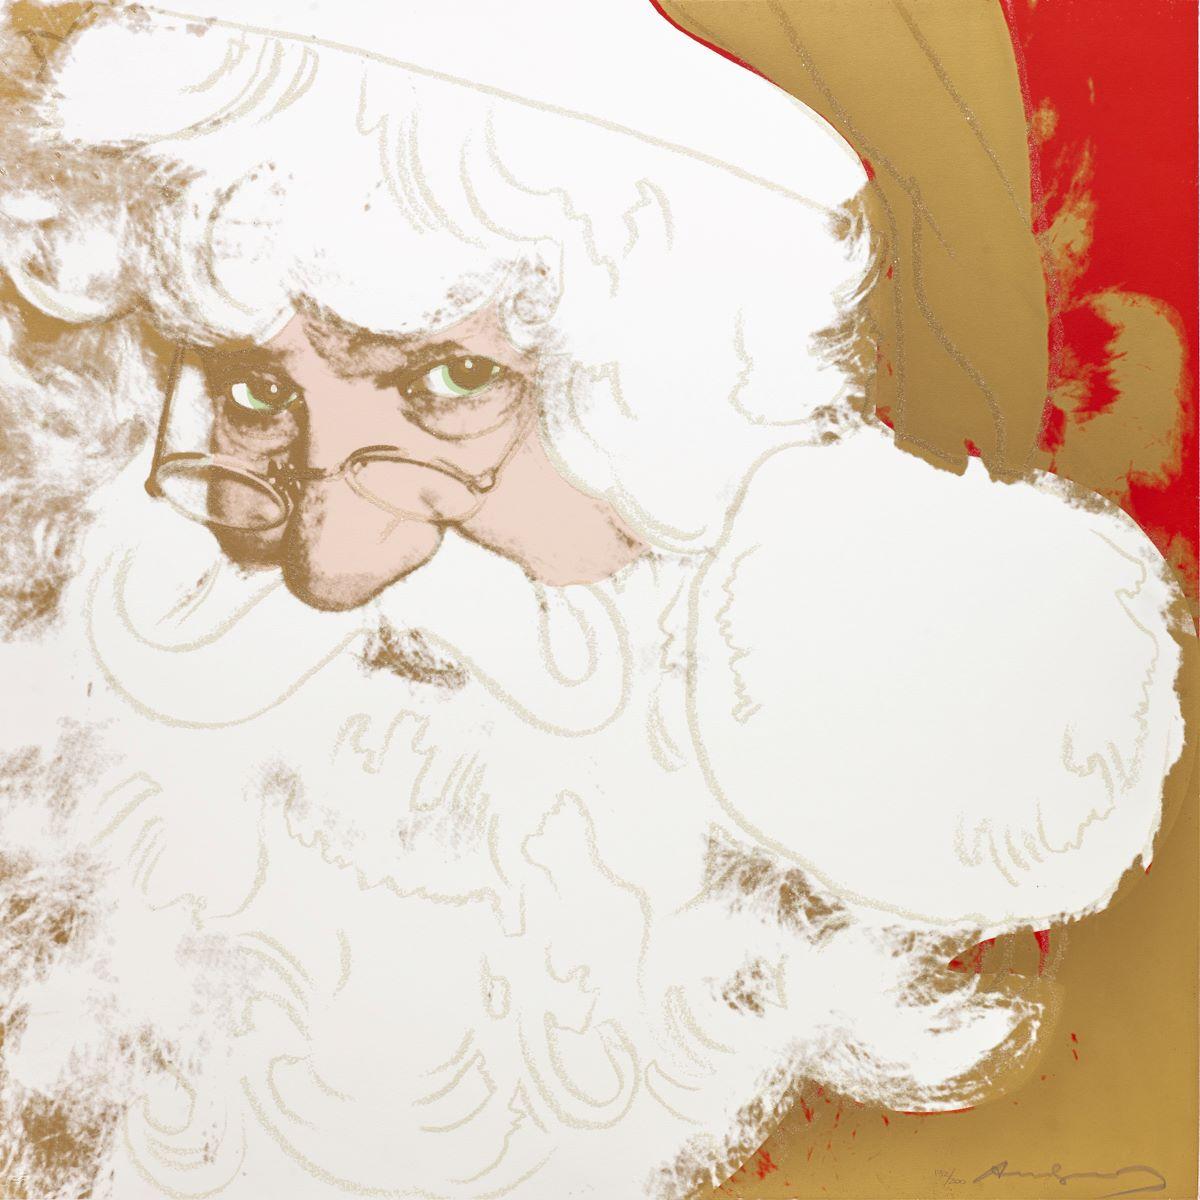 Andy Warhol Figurative Print – Santa Claus, 1981 (FS.II.266, Mythen)